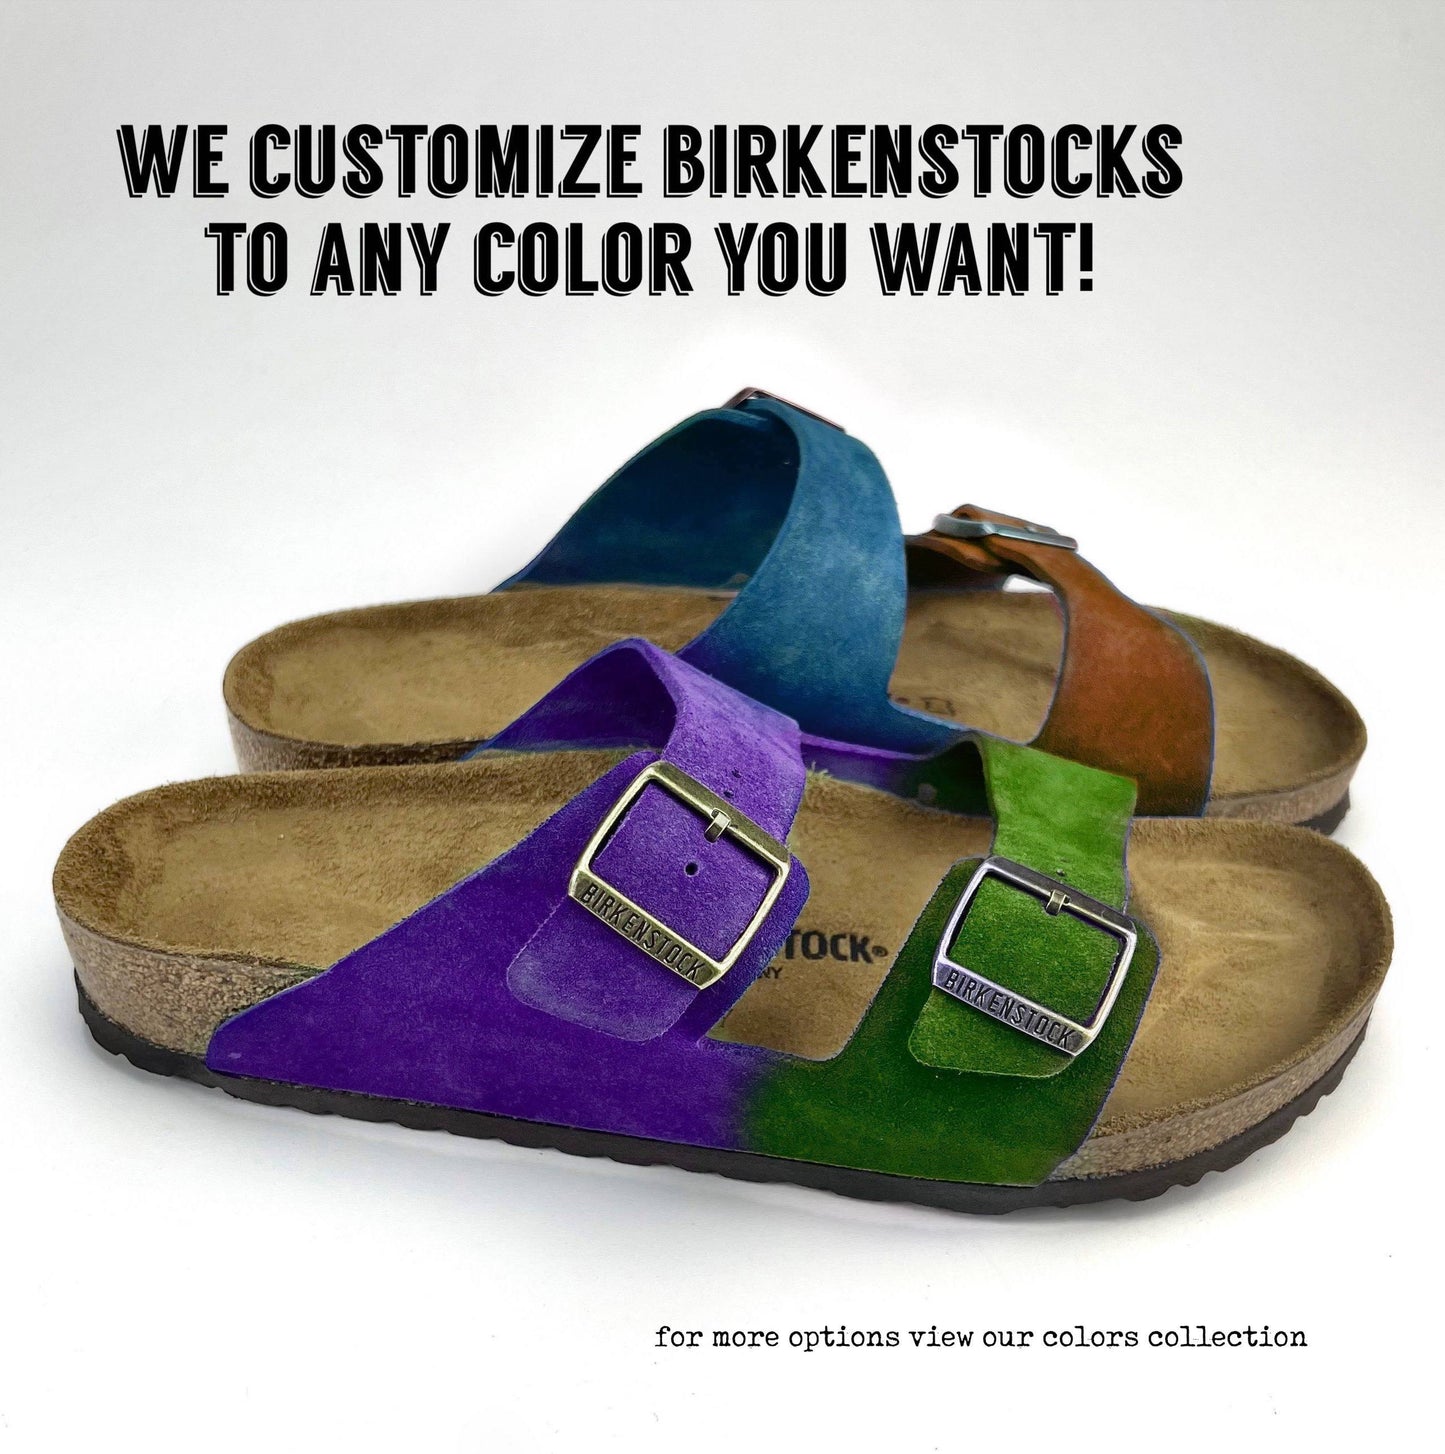 green, blue, orange & purple ombre Birkenstocks with words that say "We customize Birkenstocks"